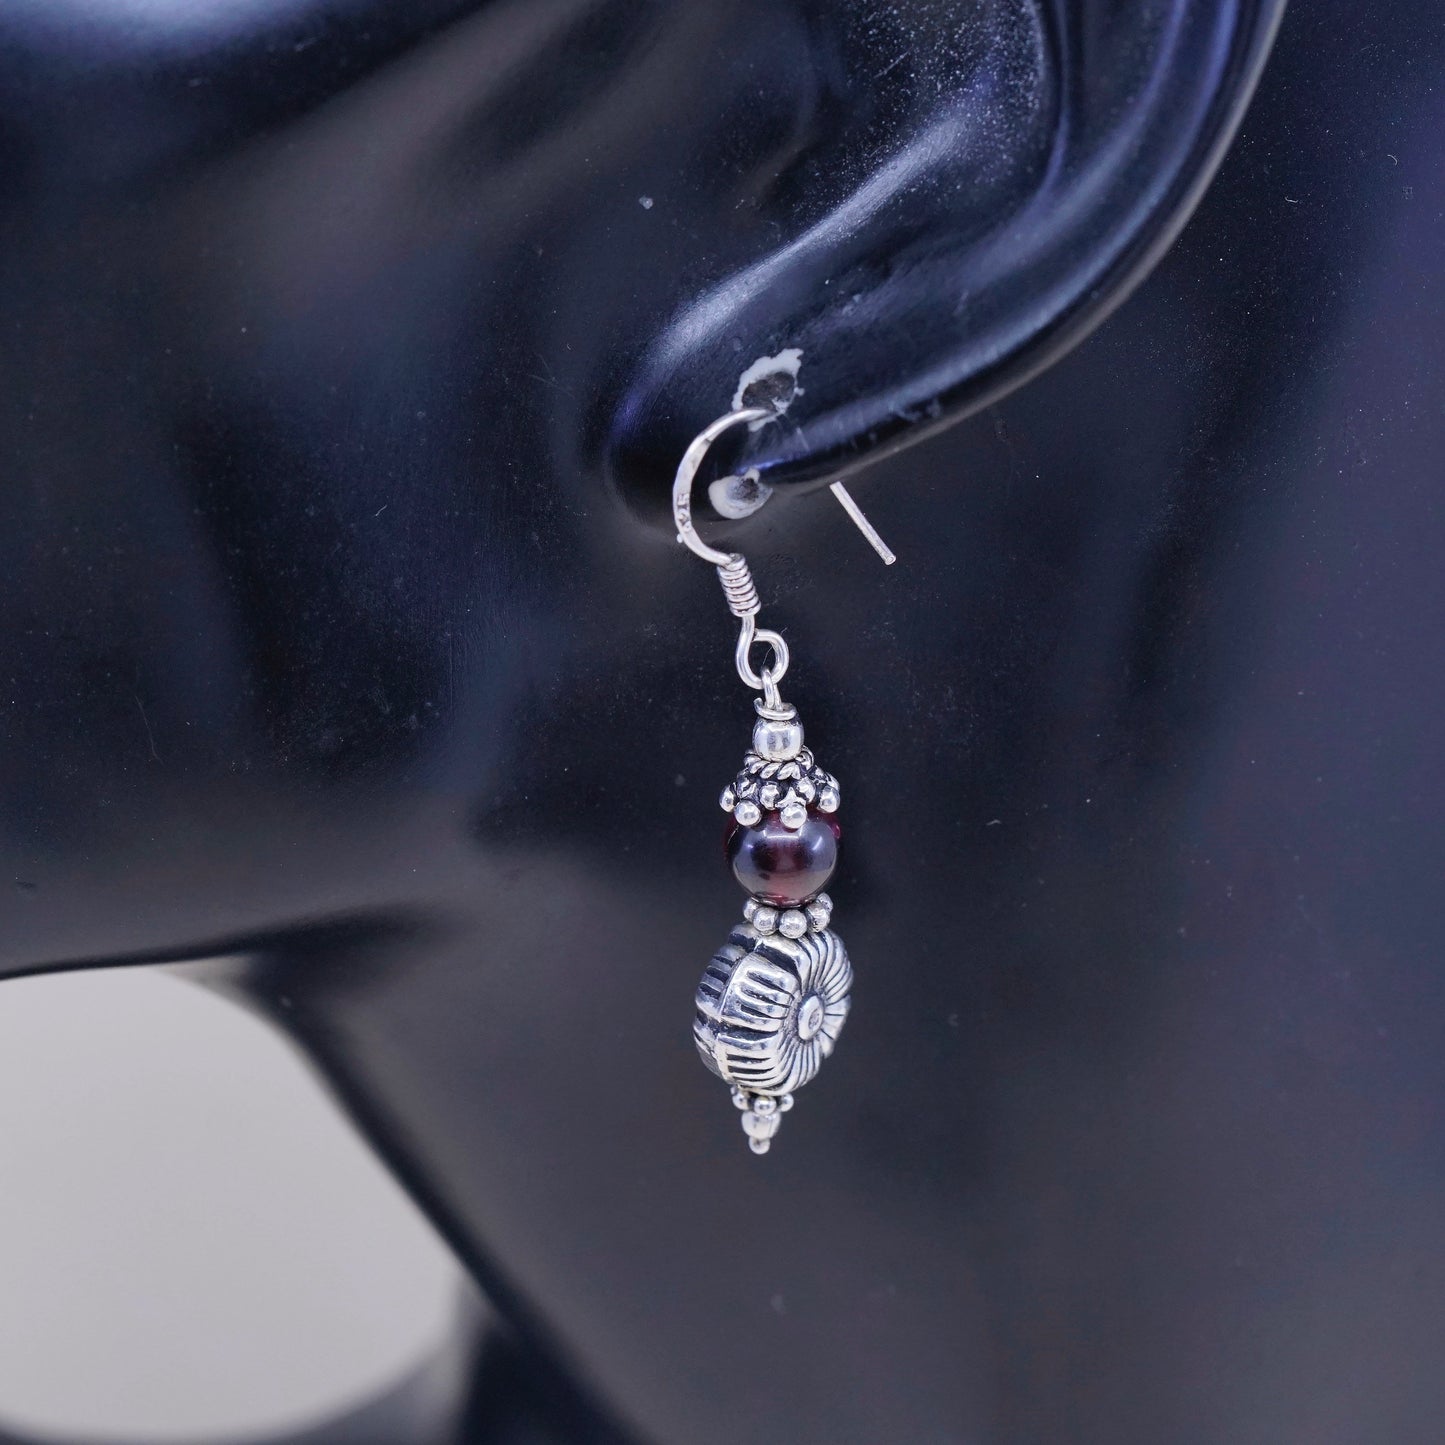 Vintage sterling silver flower earrings, 925 silver with garnet beads